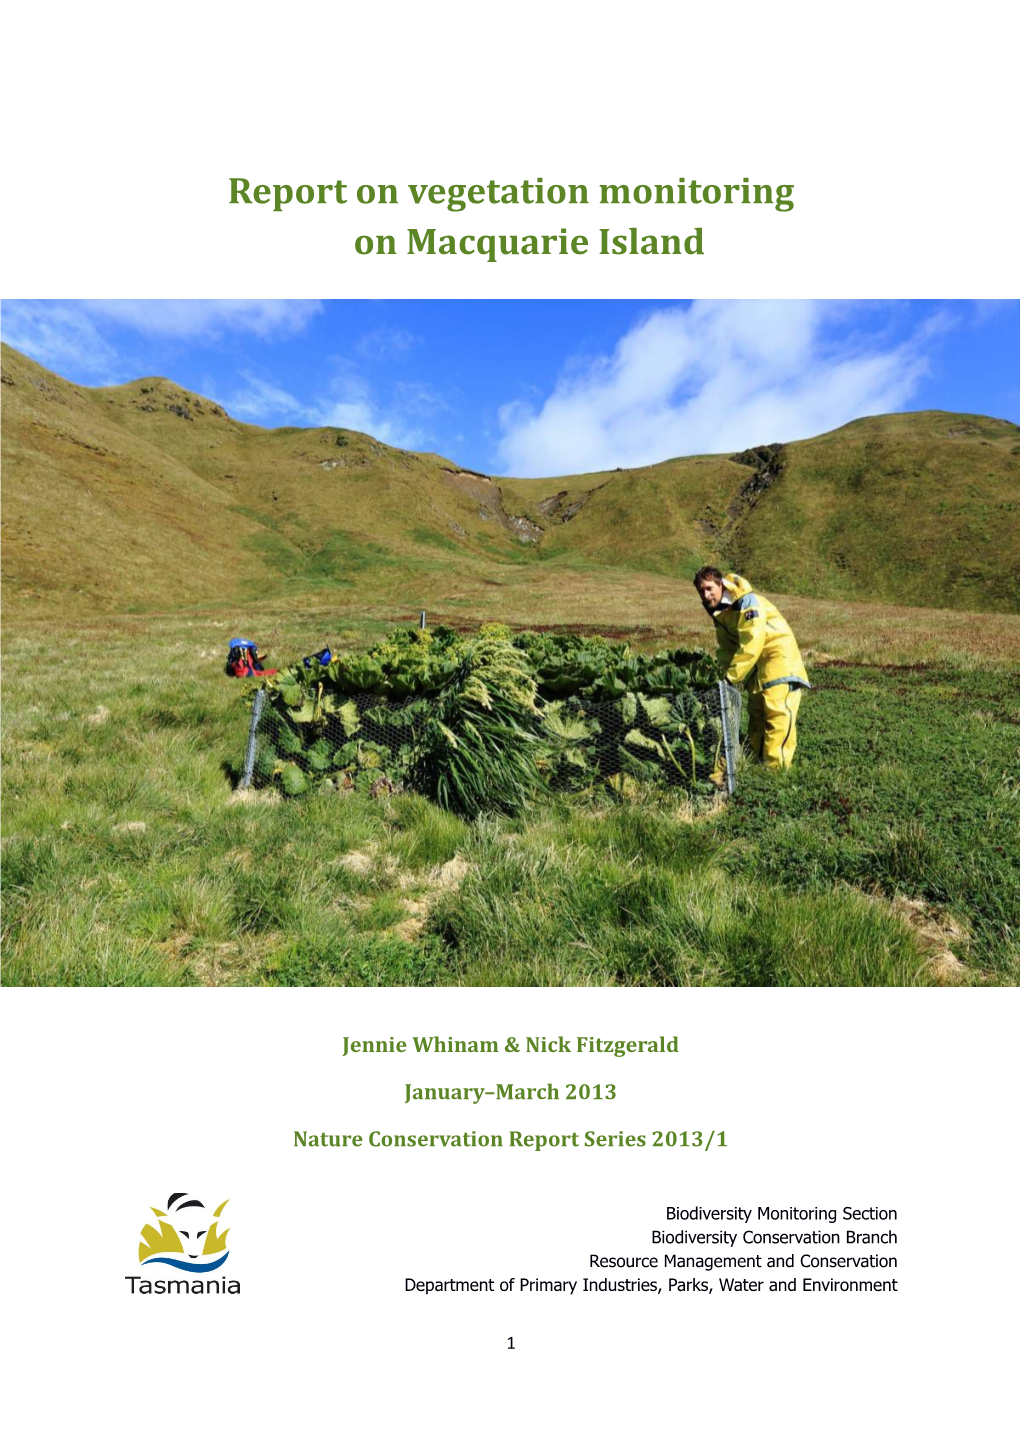 Report on Vegetation Monitoring on Macquarie Island